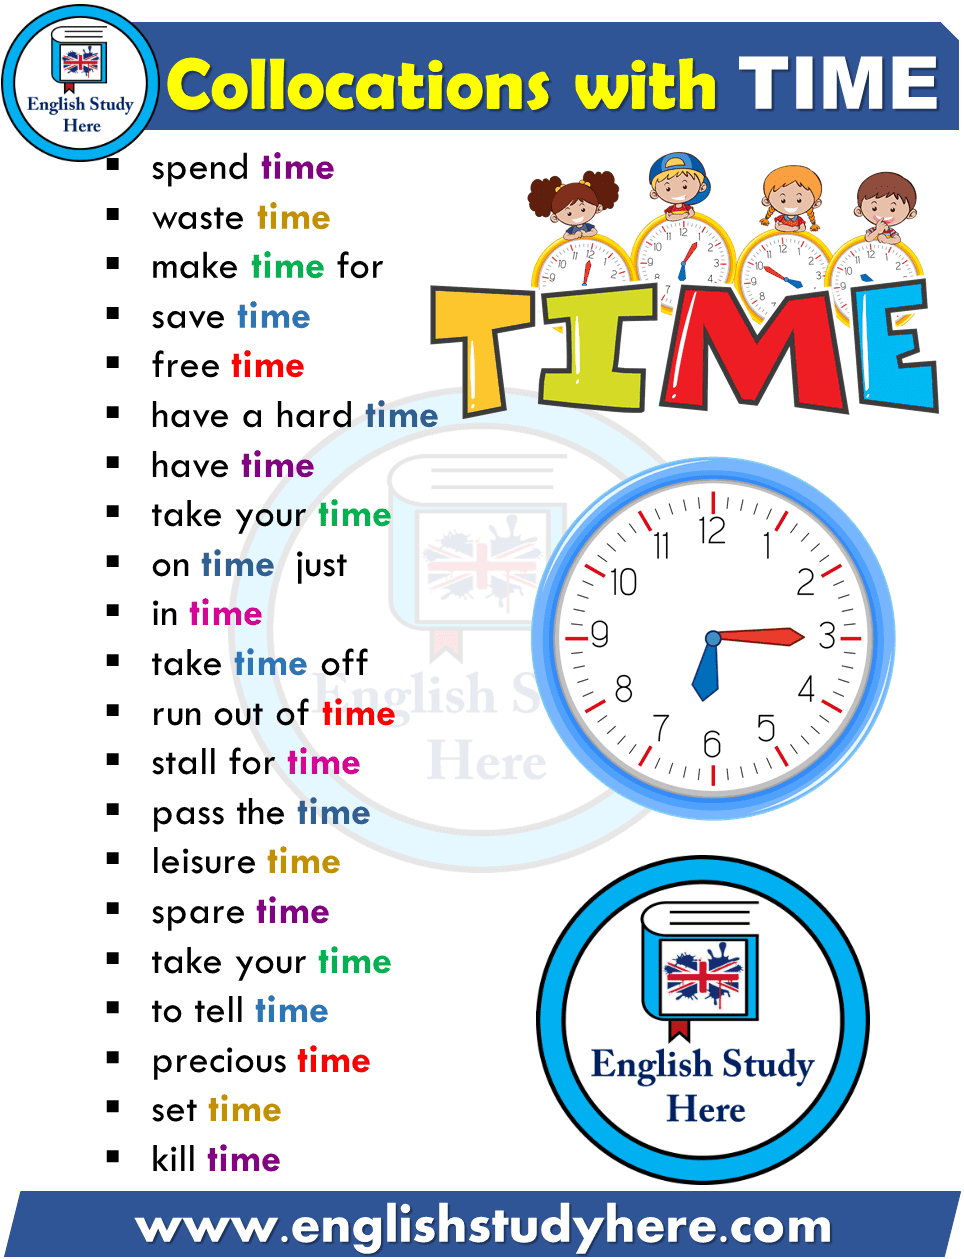 Study по английски. Time English. Time на английском. Плакаты time English. Time collocations.